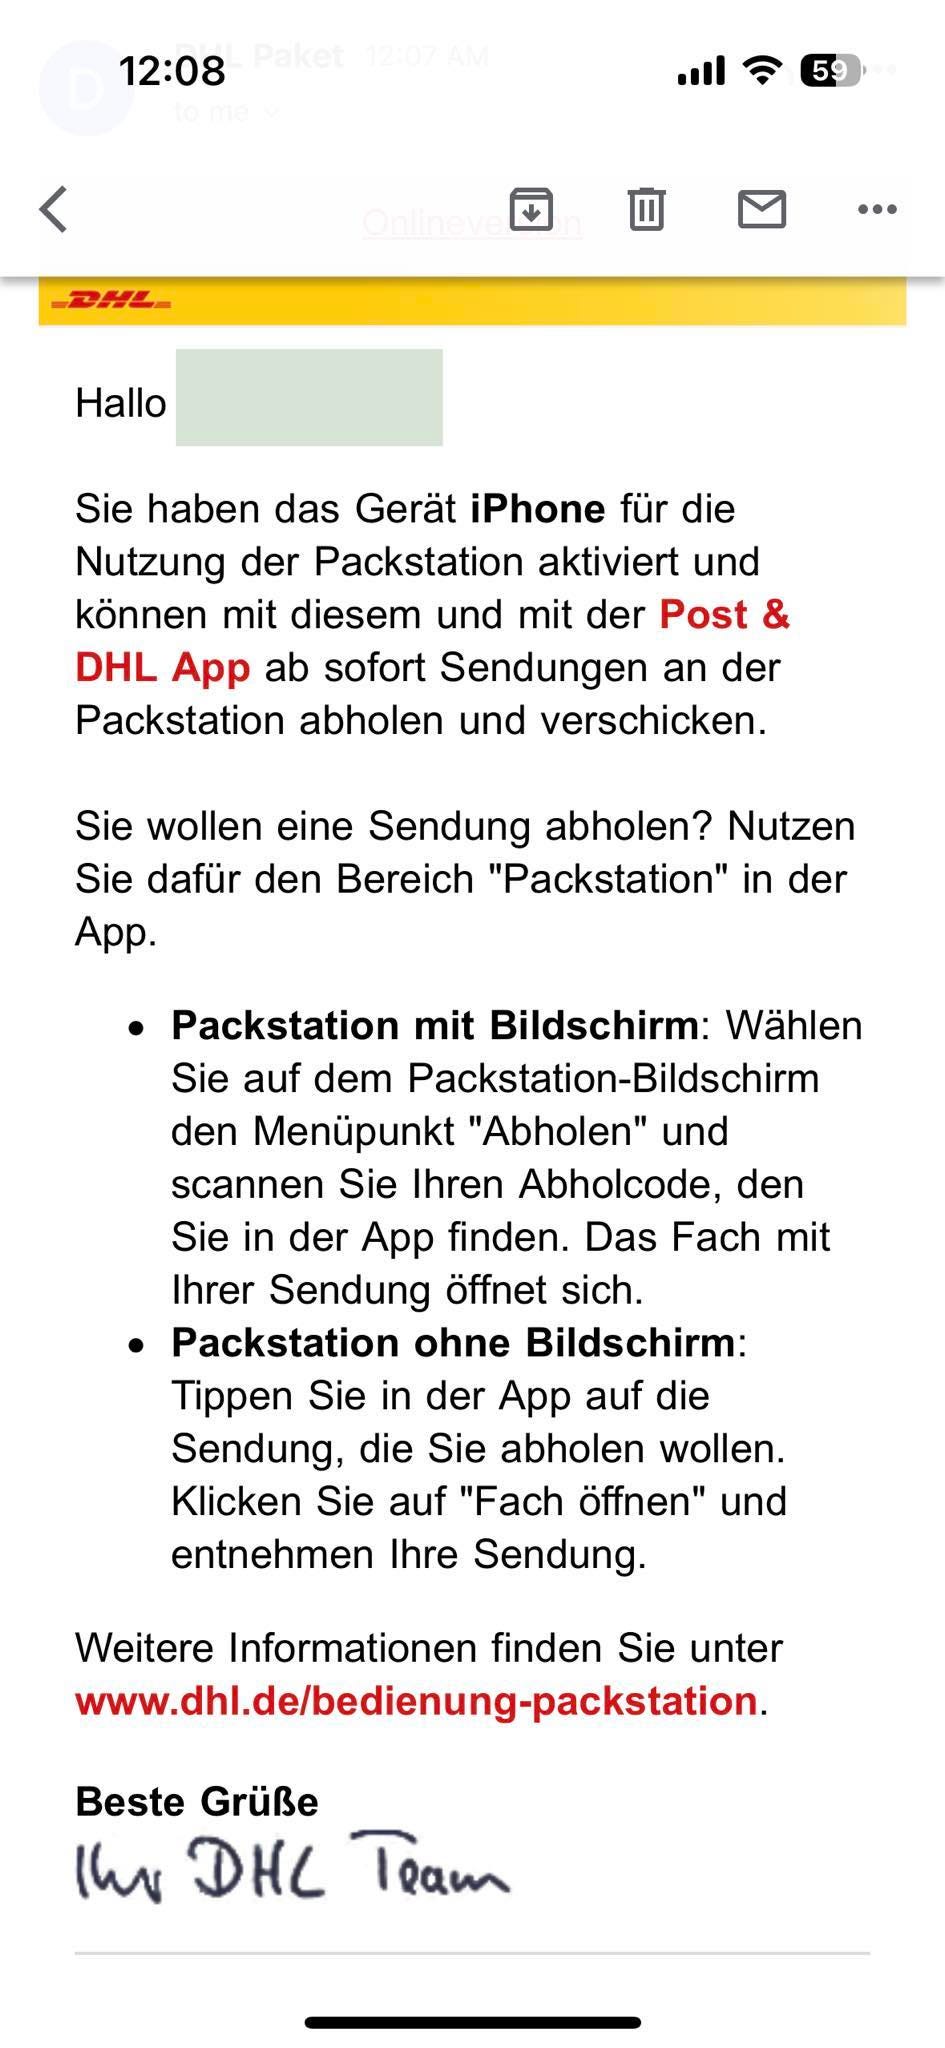 DHL Packstation手機app開通服務